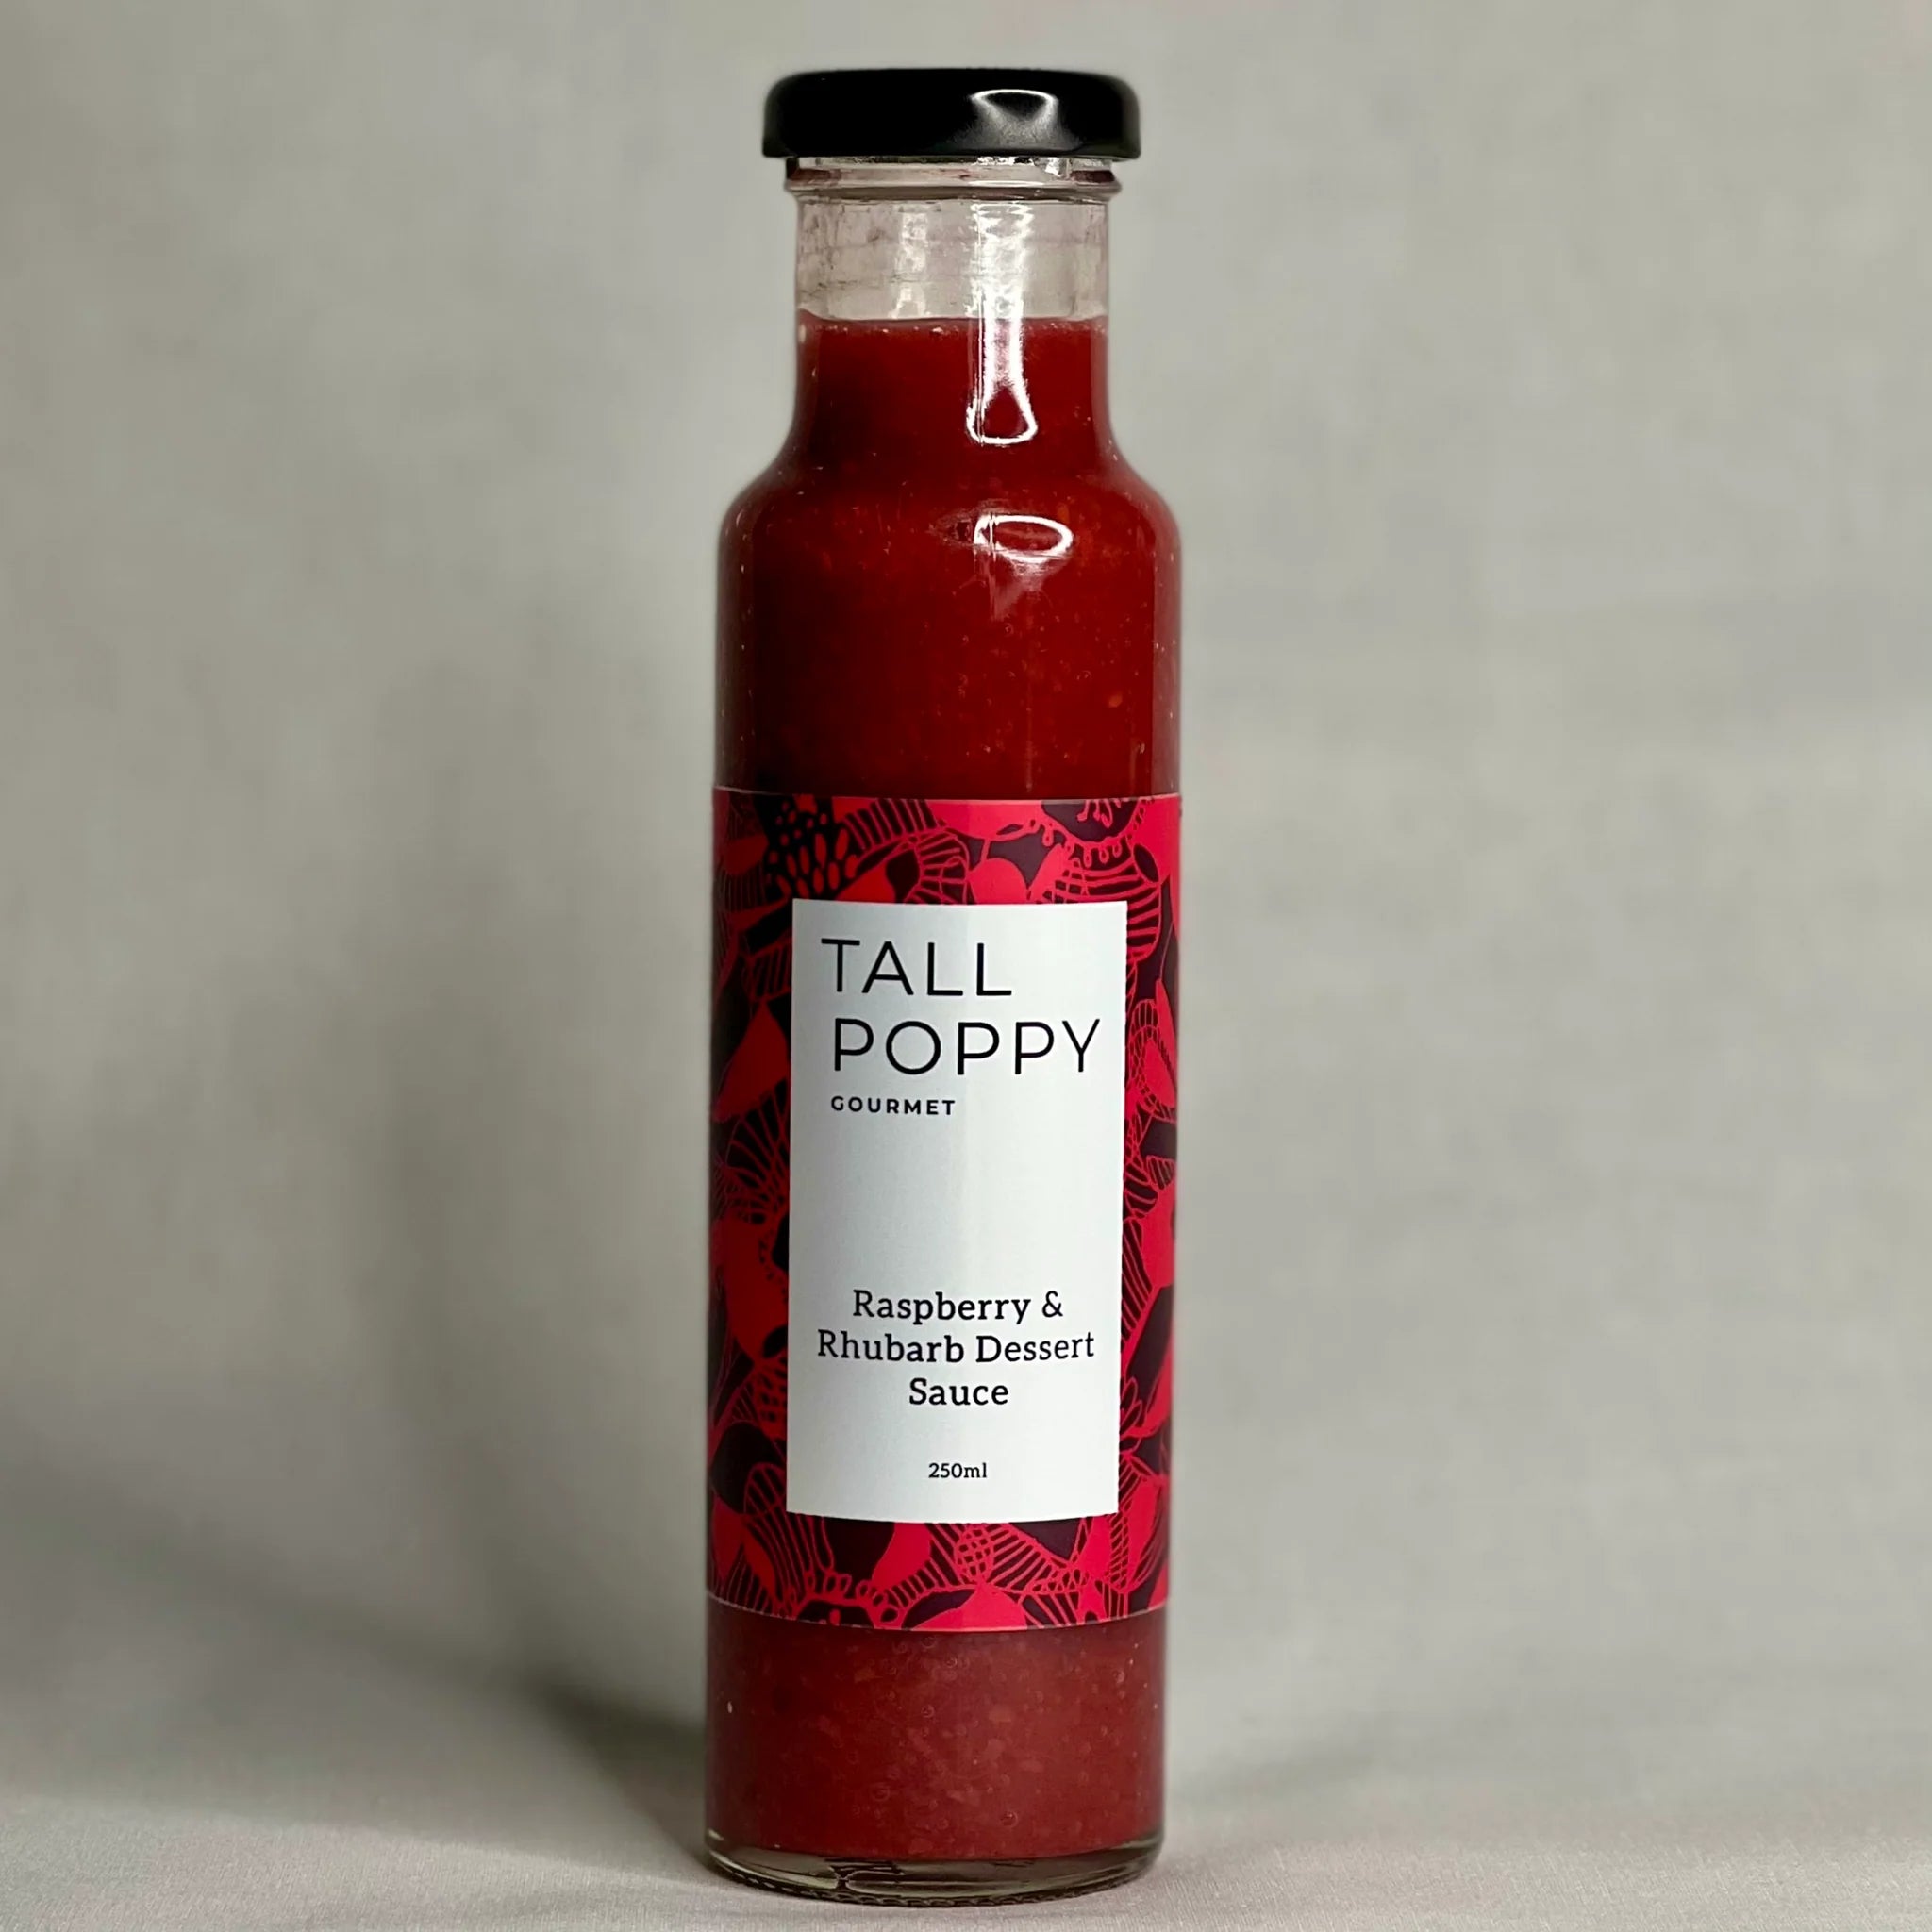 Tall Poppy Gourmet Raspberry & Rhubarb Dessert Sauce